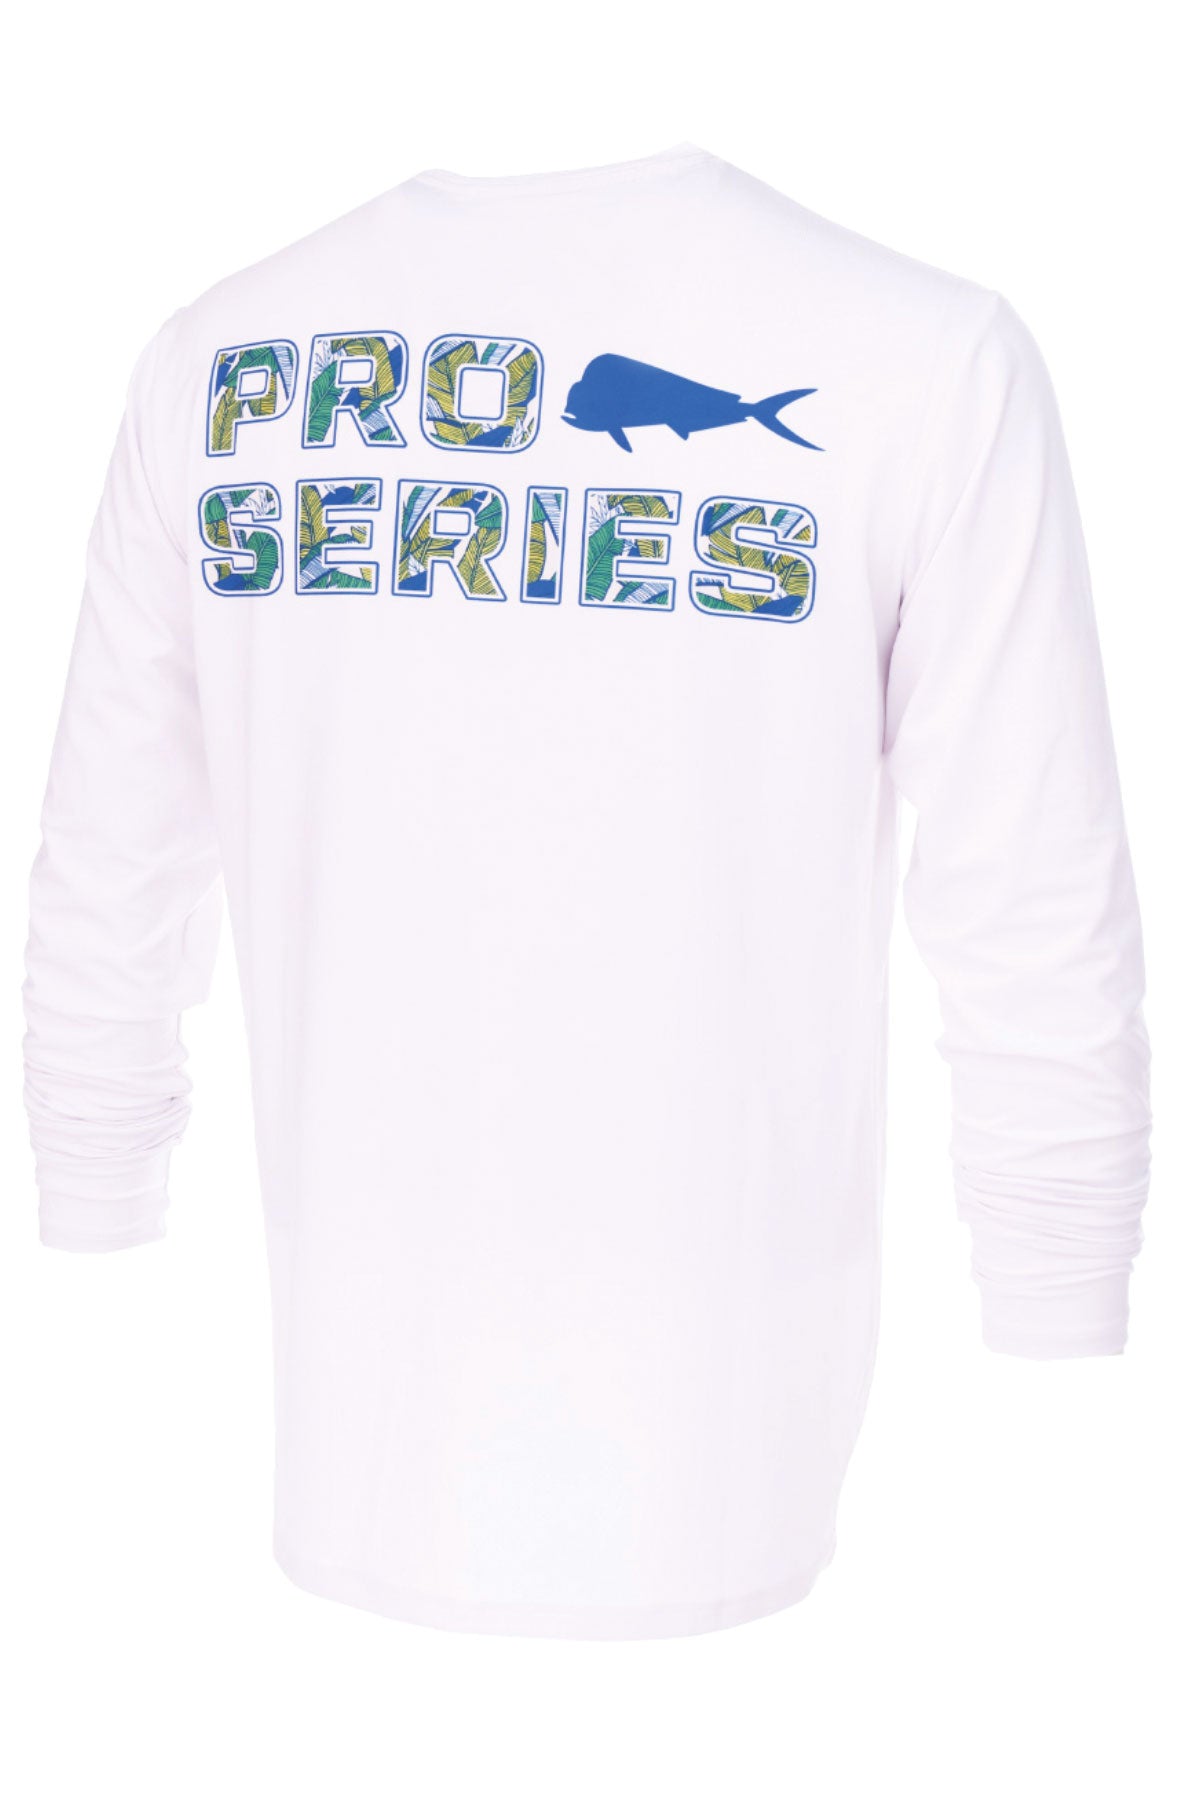 Apex Crew Neck  Long Sleeve Fishing Shirt - White - Stafu Pro Series